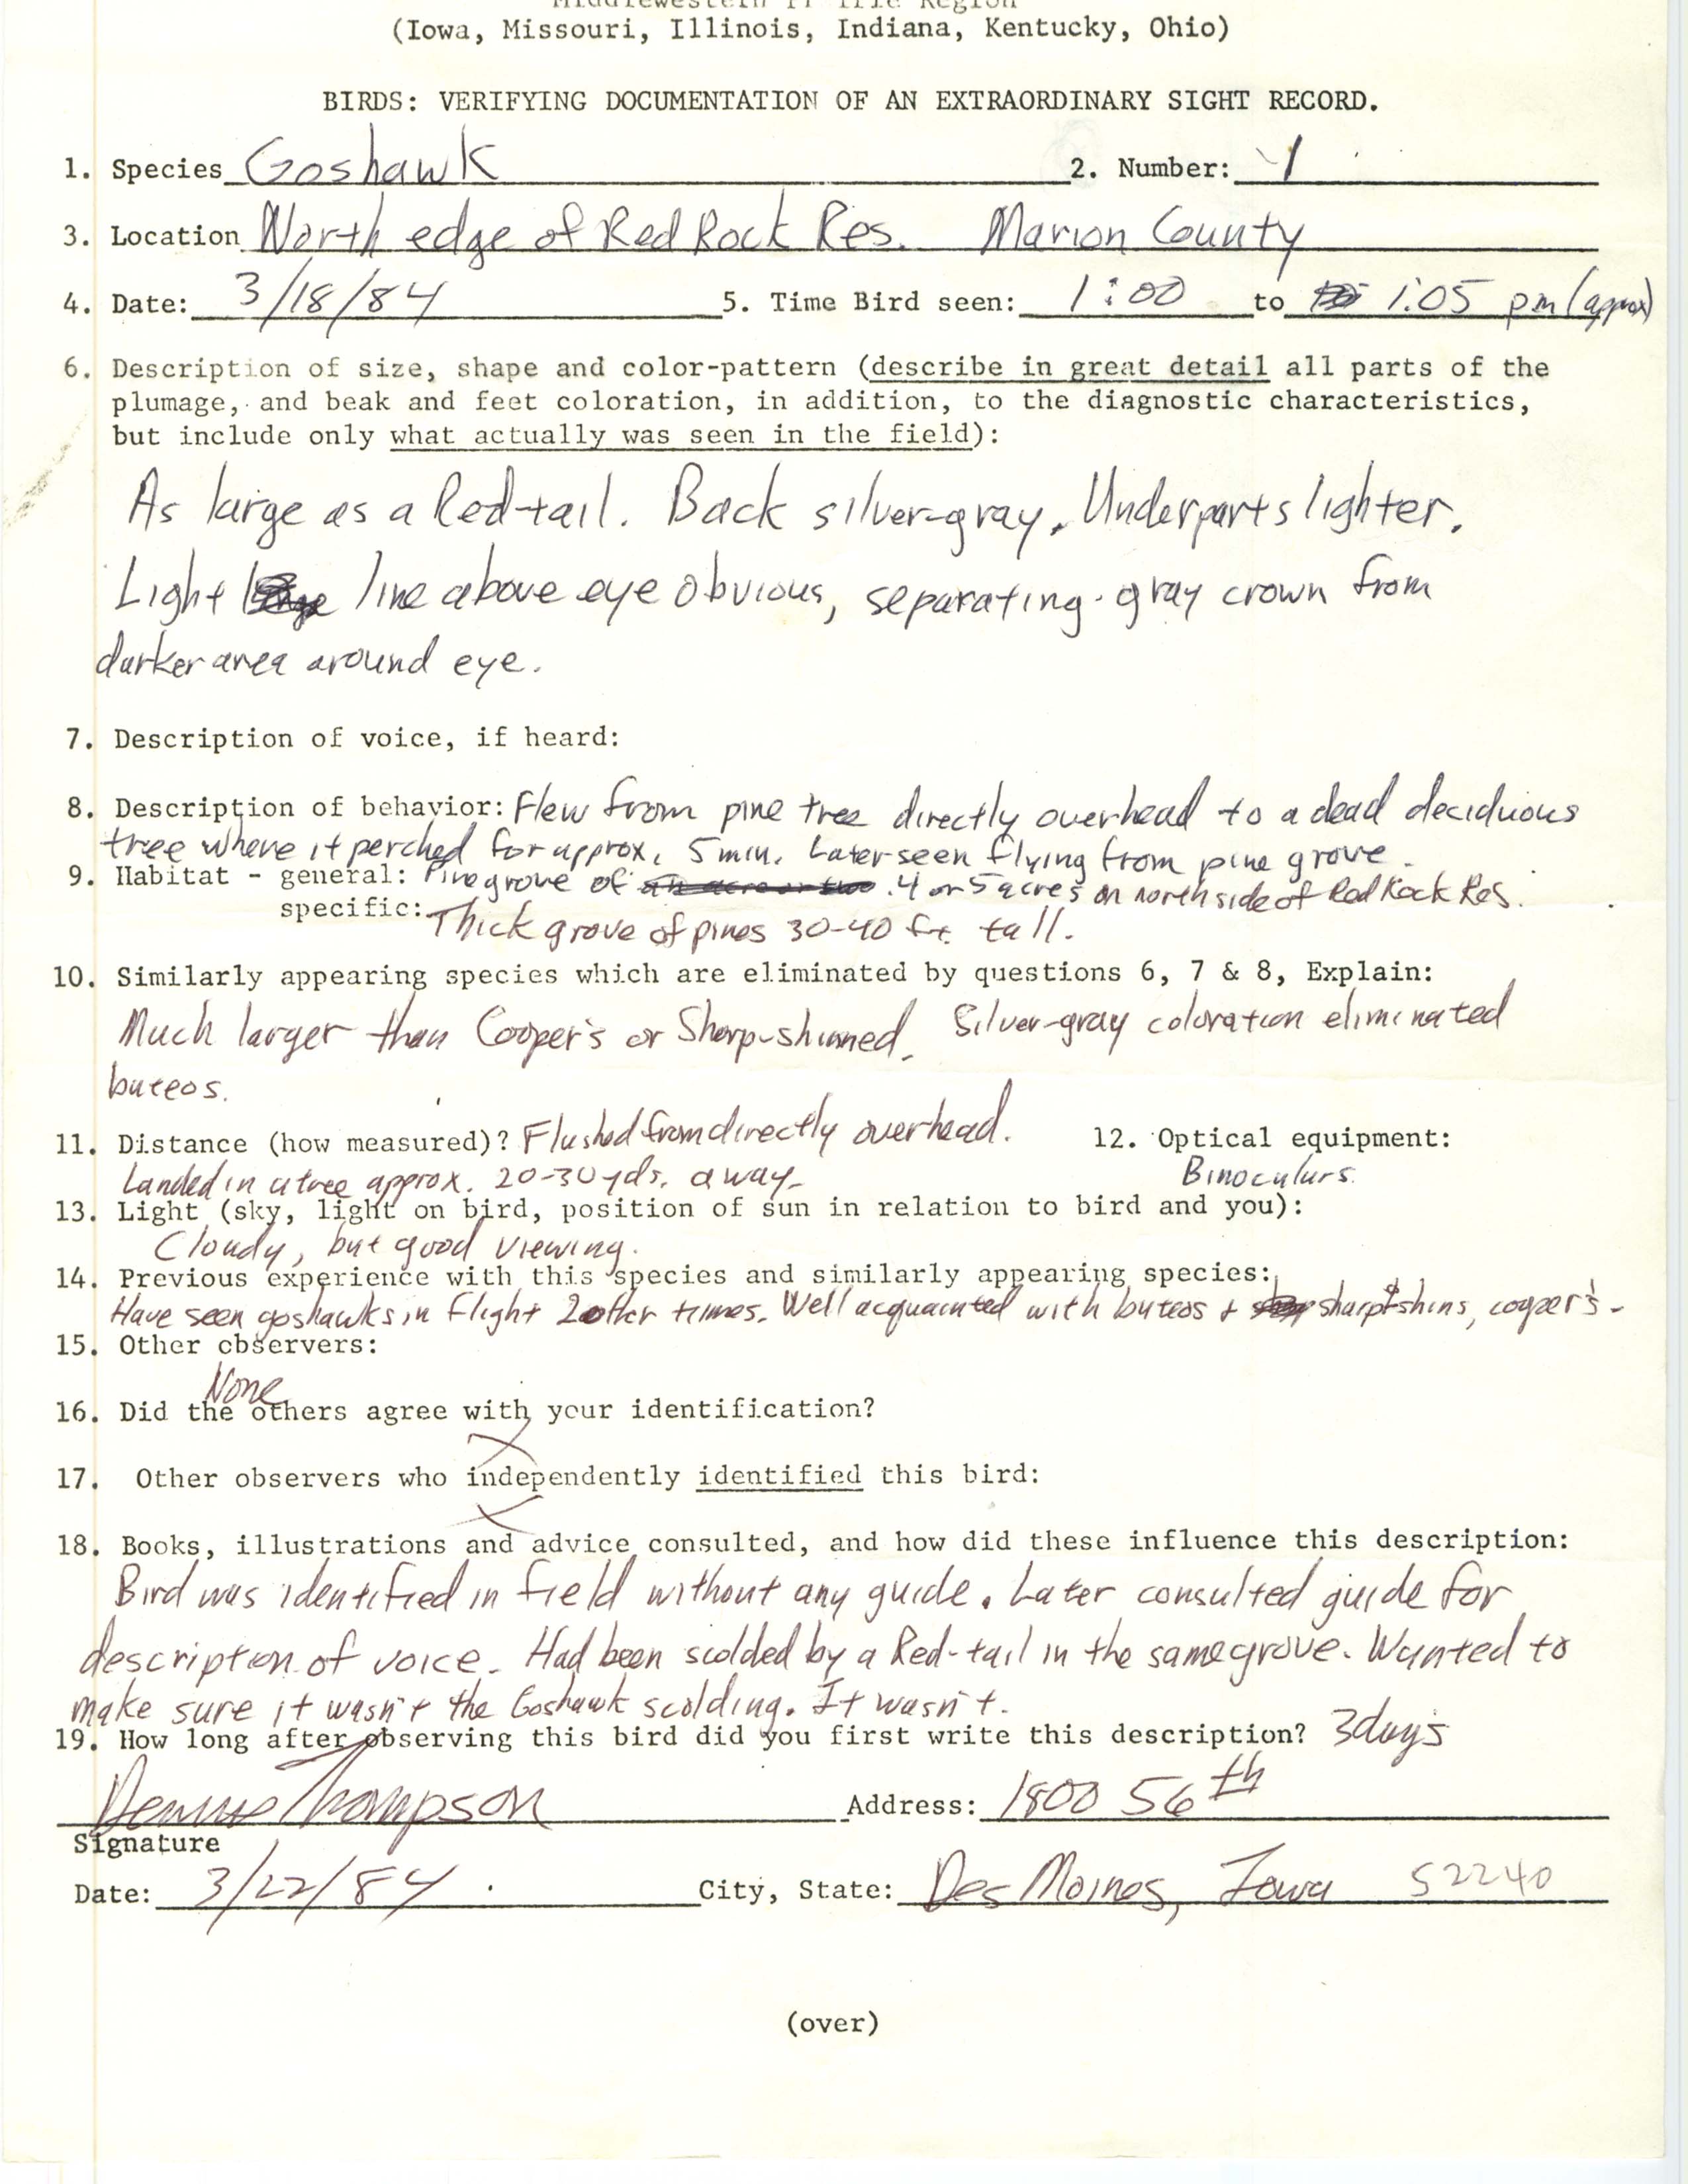 Rare bird documentation form for Northern Goshawk at Red Rock Reservoir, 1984